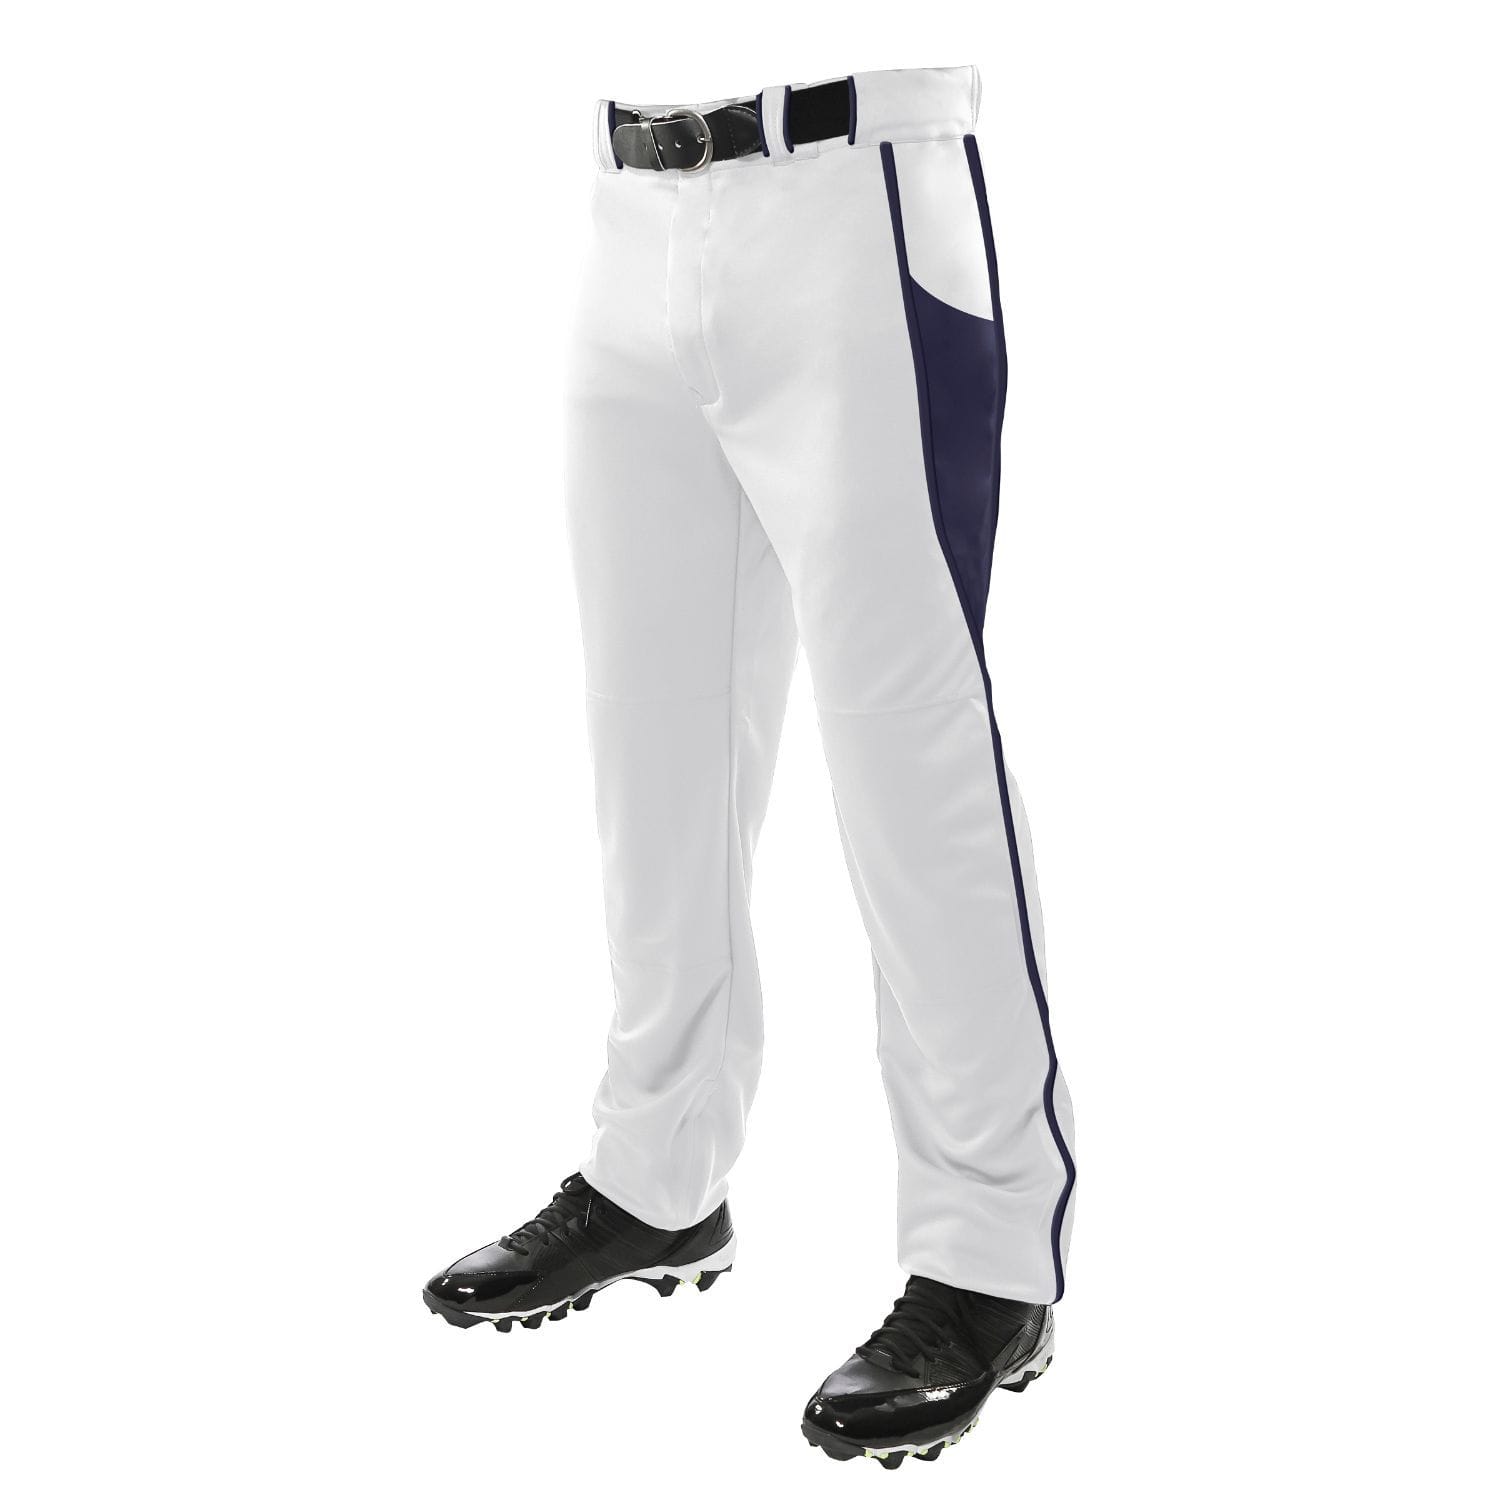 Champro Sports : Baseball Champro Adult Triple Crown Baseball Pant White Navy Medium